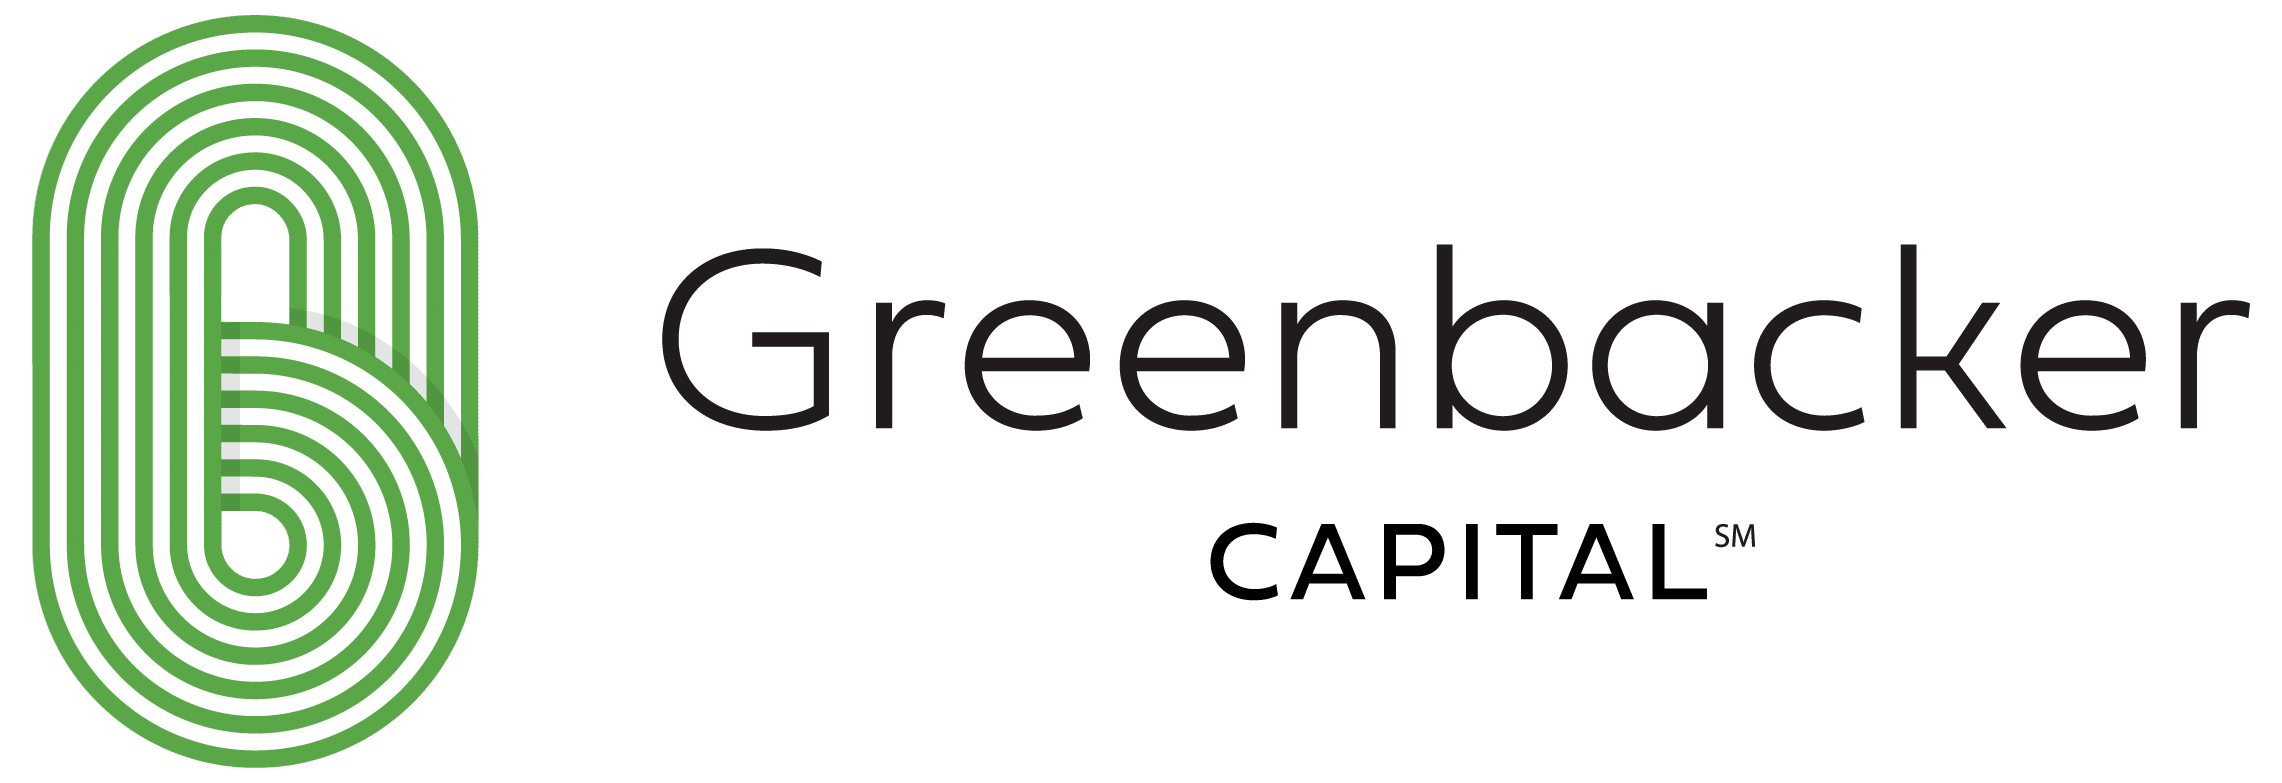 Greenbacker Capital Peak Power